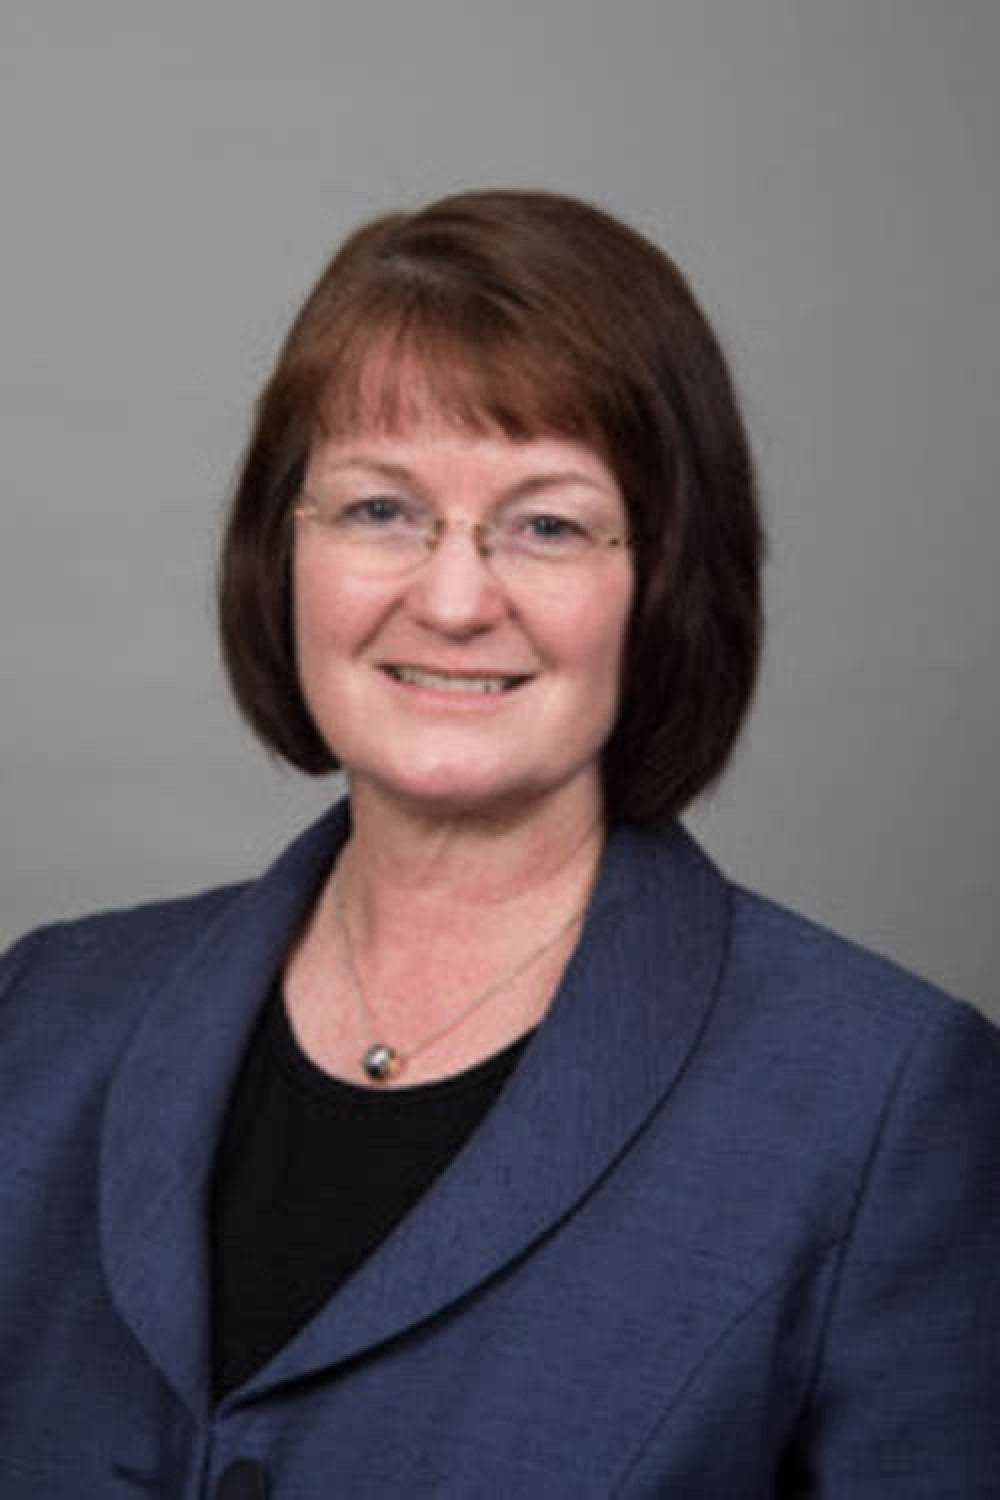 Conservative Group Leader Cllr Janet Clowes